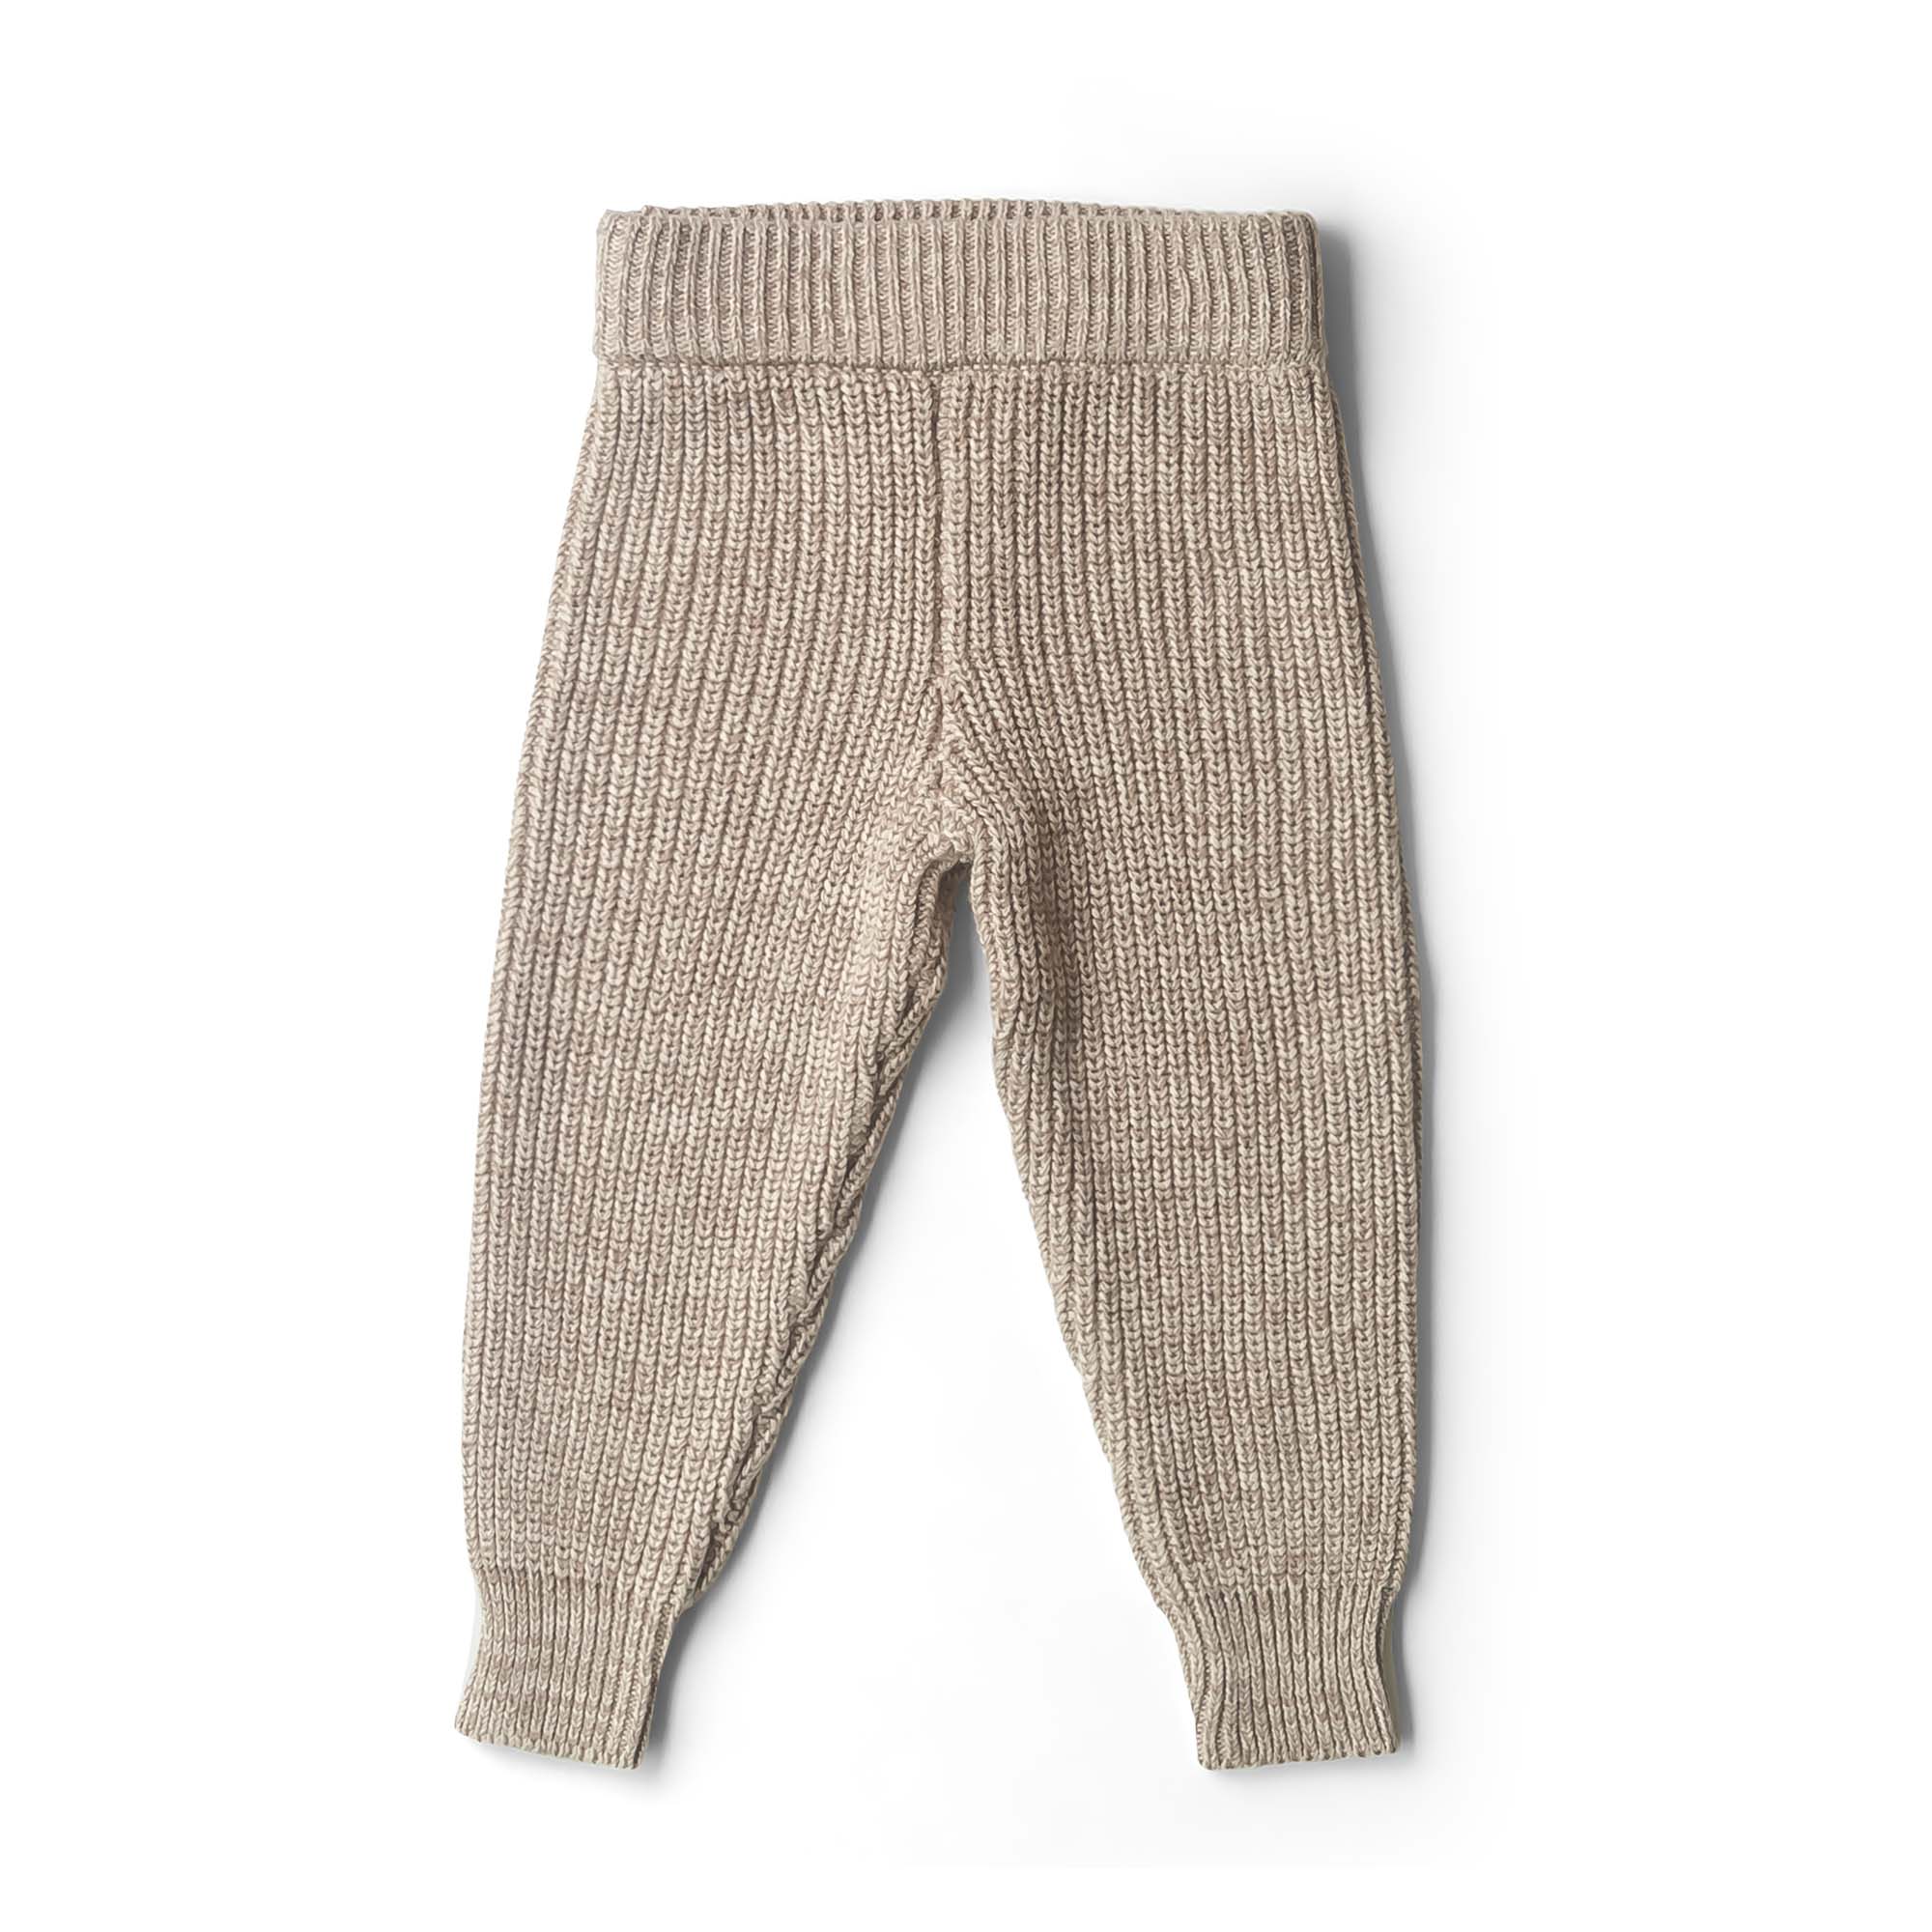 Organic Cotton Knit Pants - Pecan